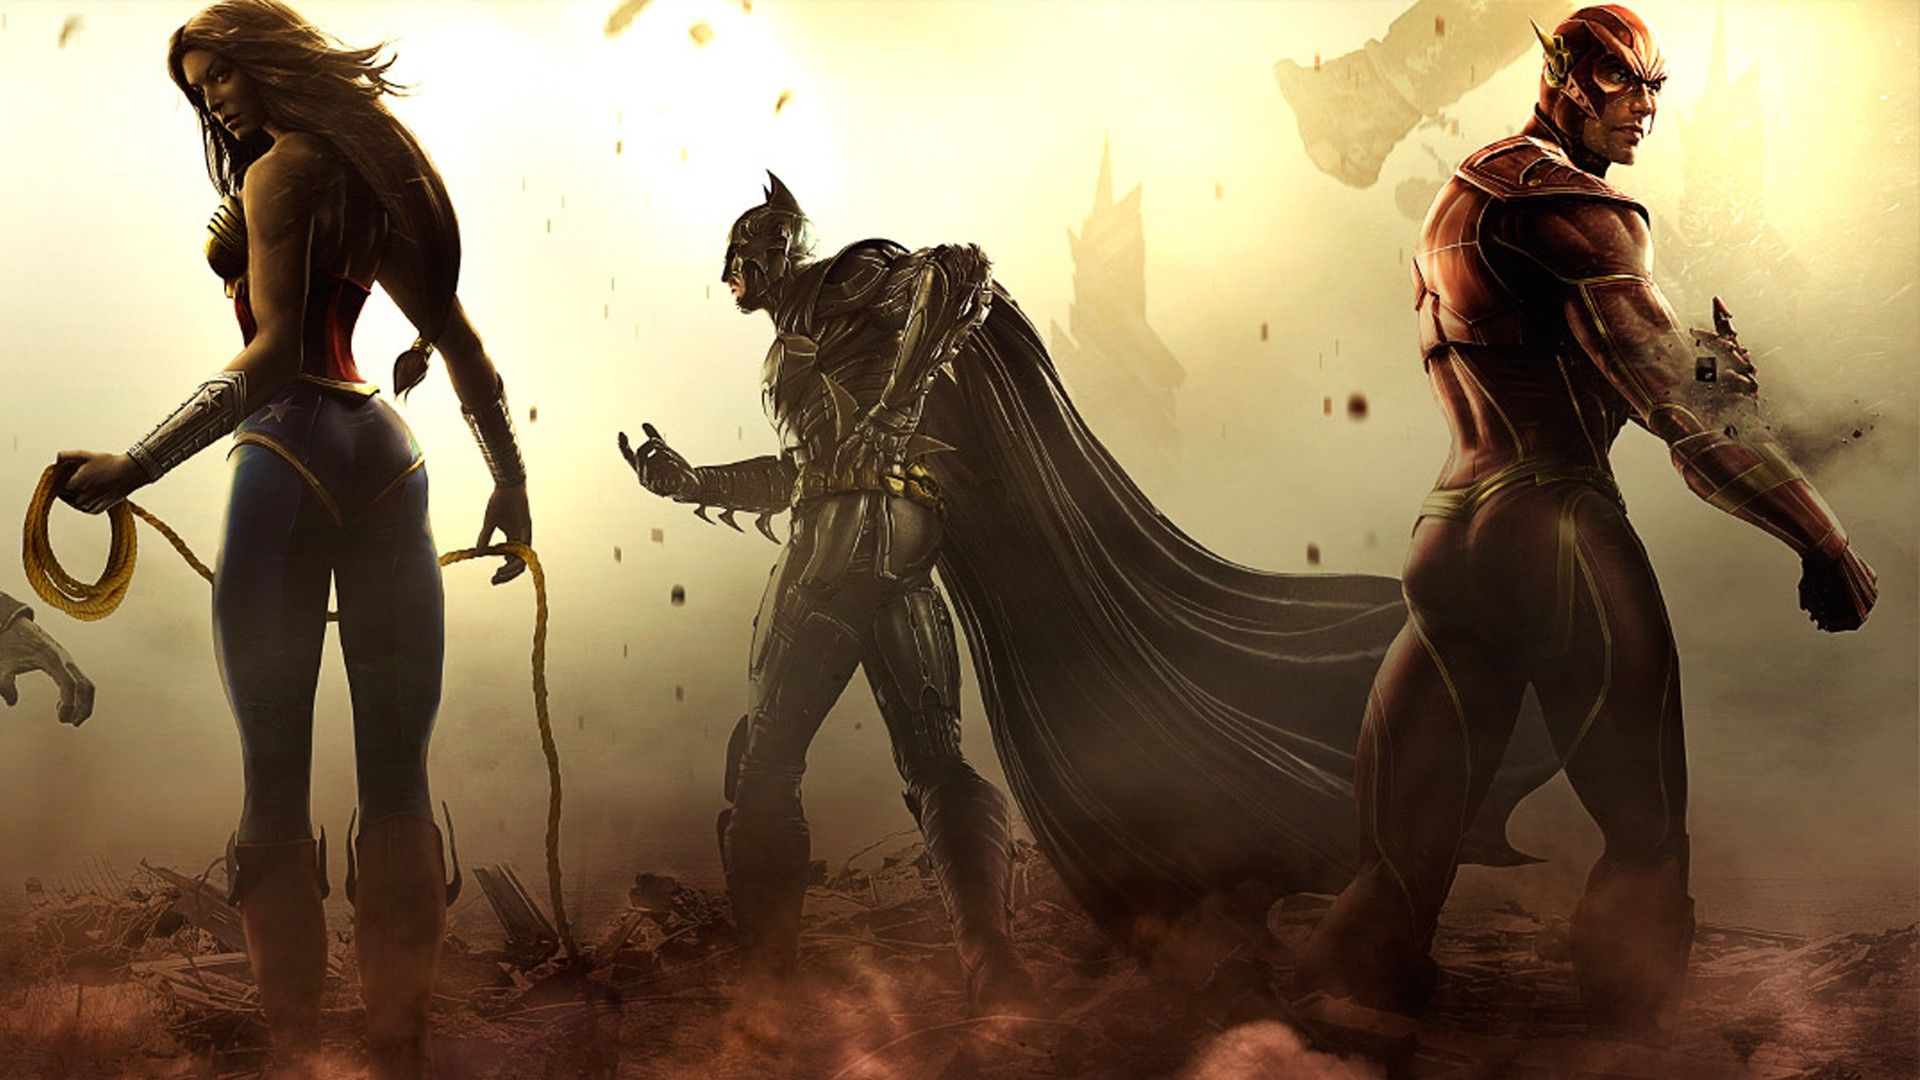 Batman, flash, gods, Wonder Woman, Injustice wallpaper